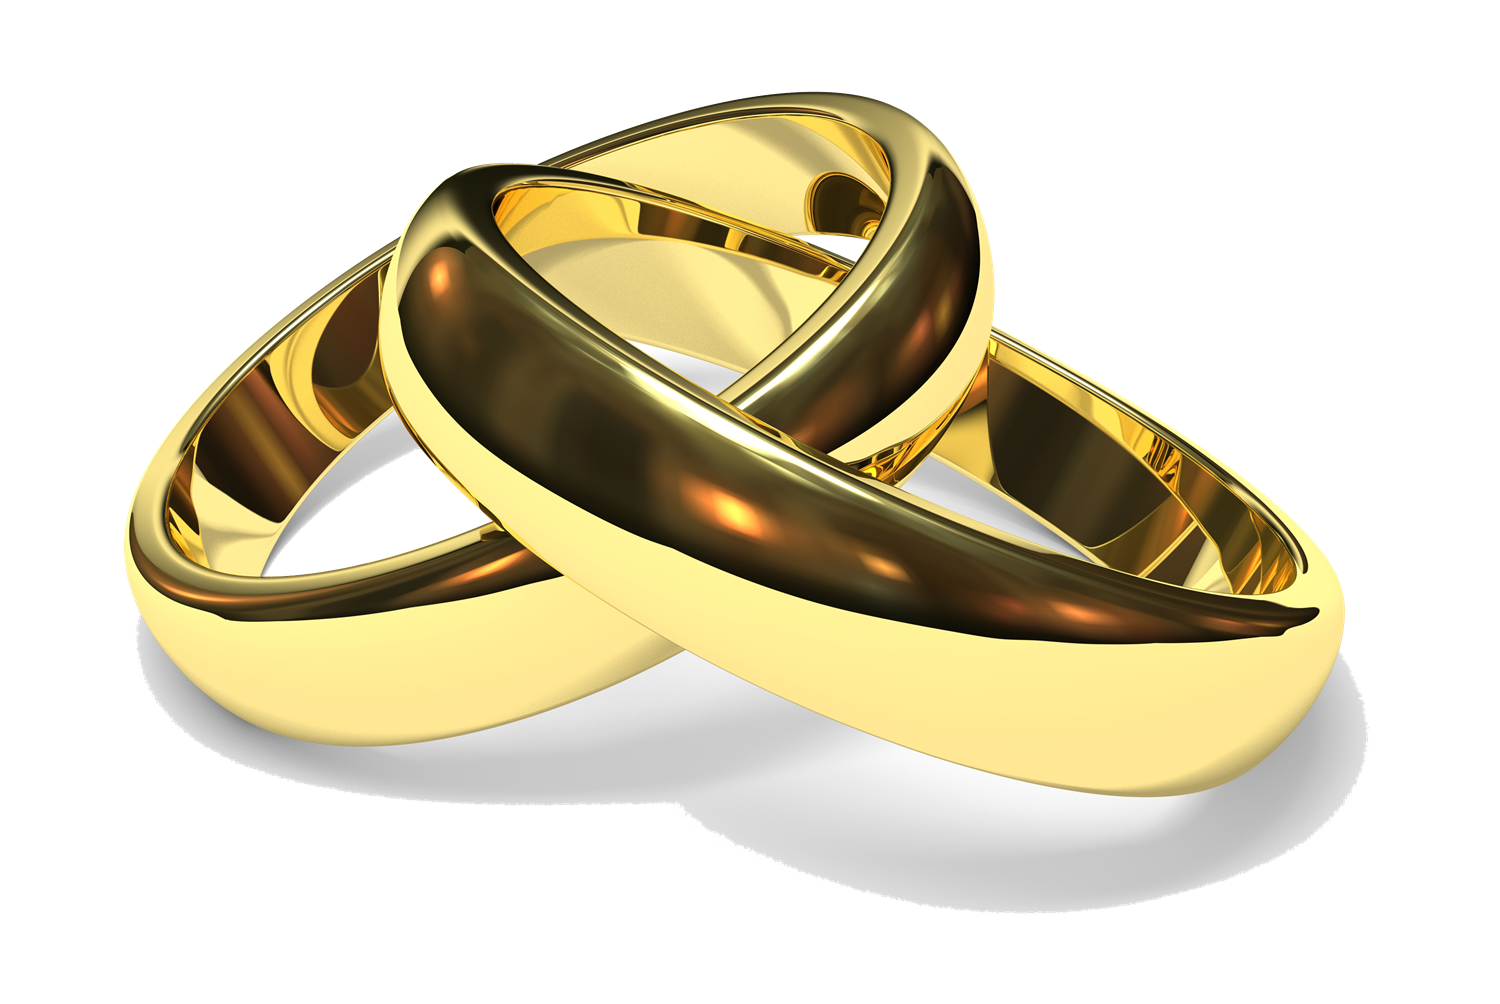 Golden wedding ring, Valentin